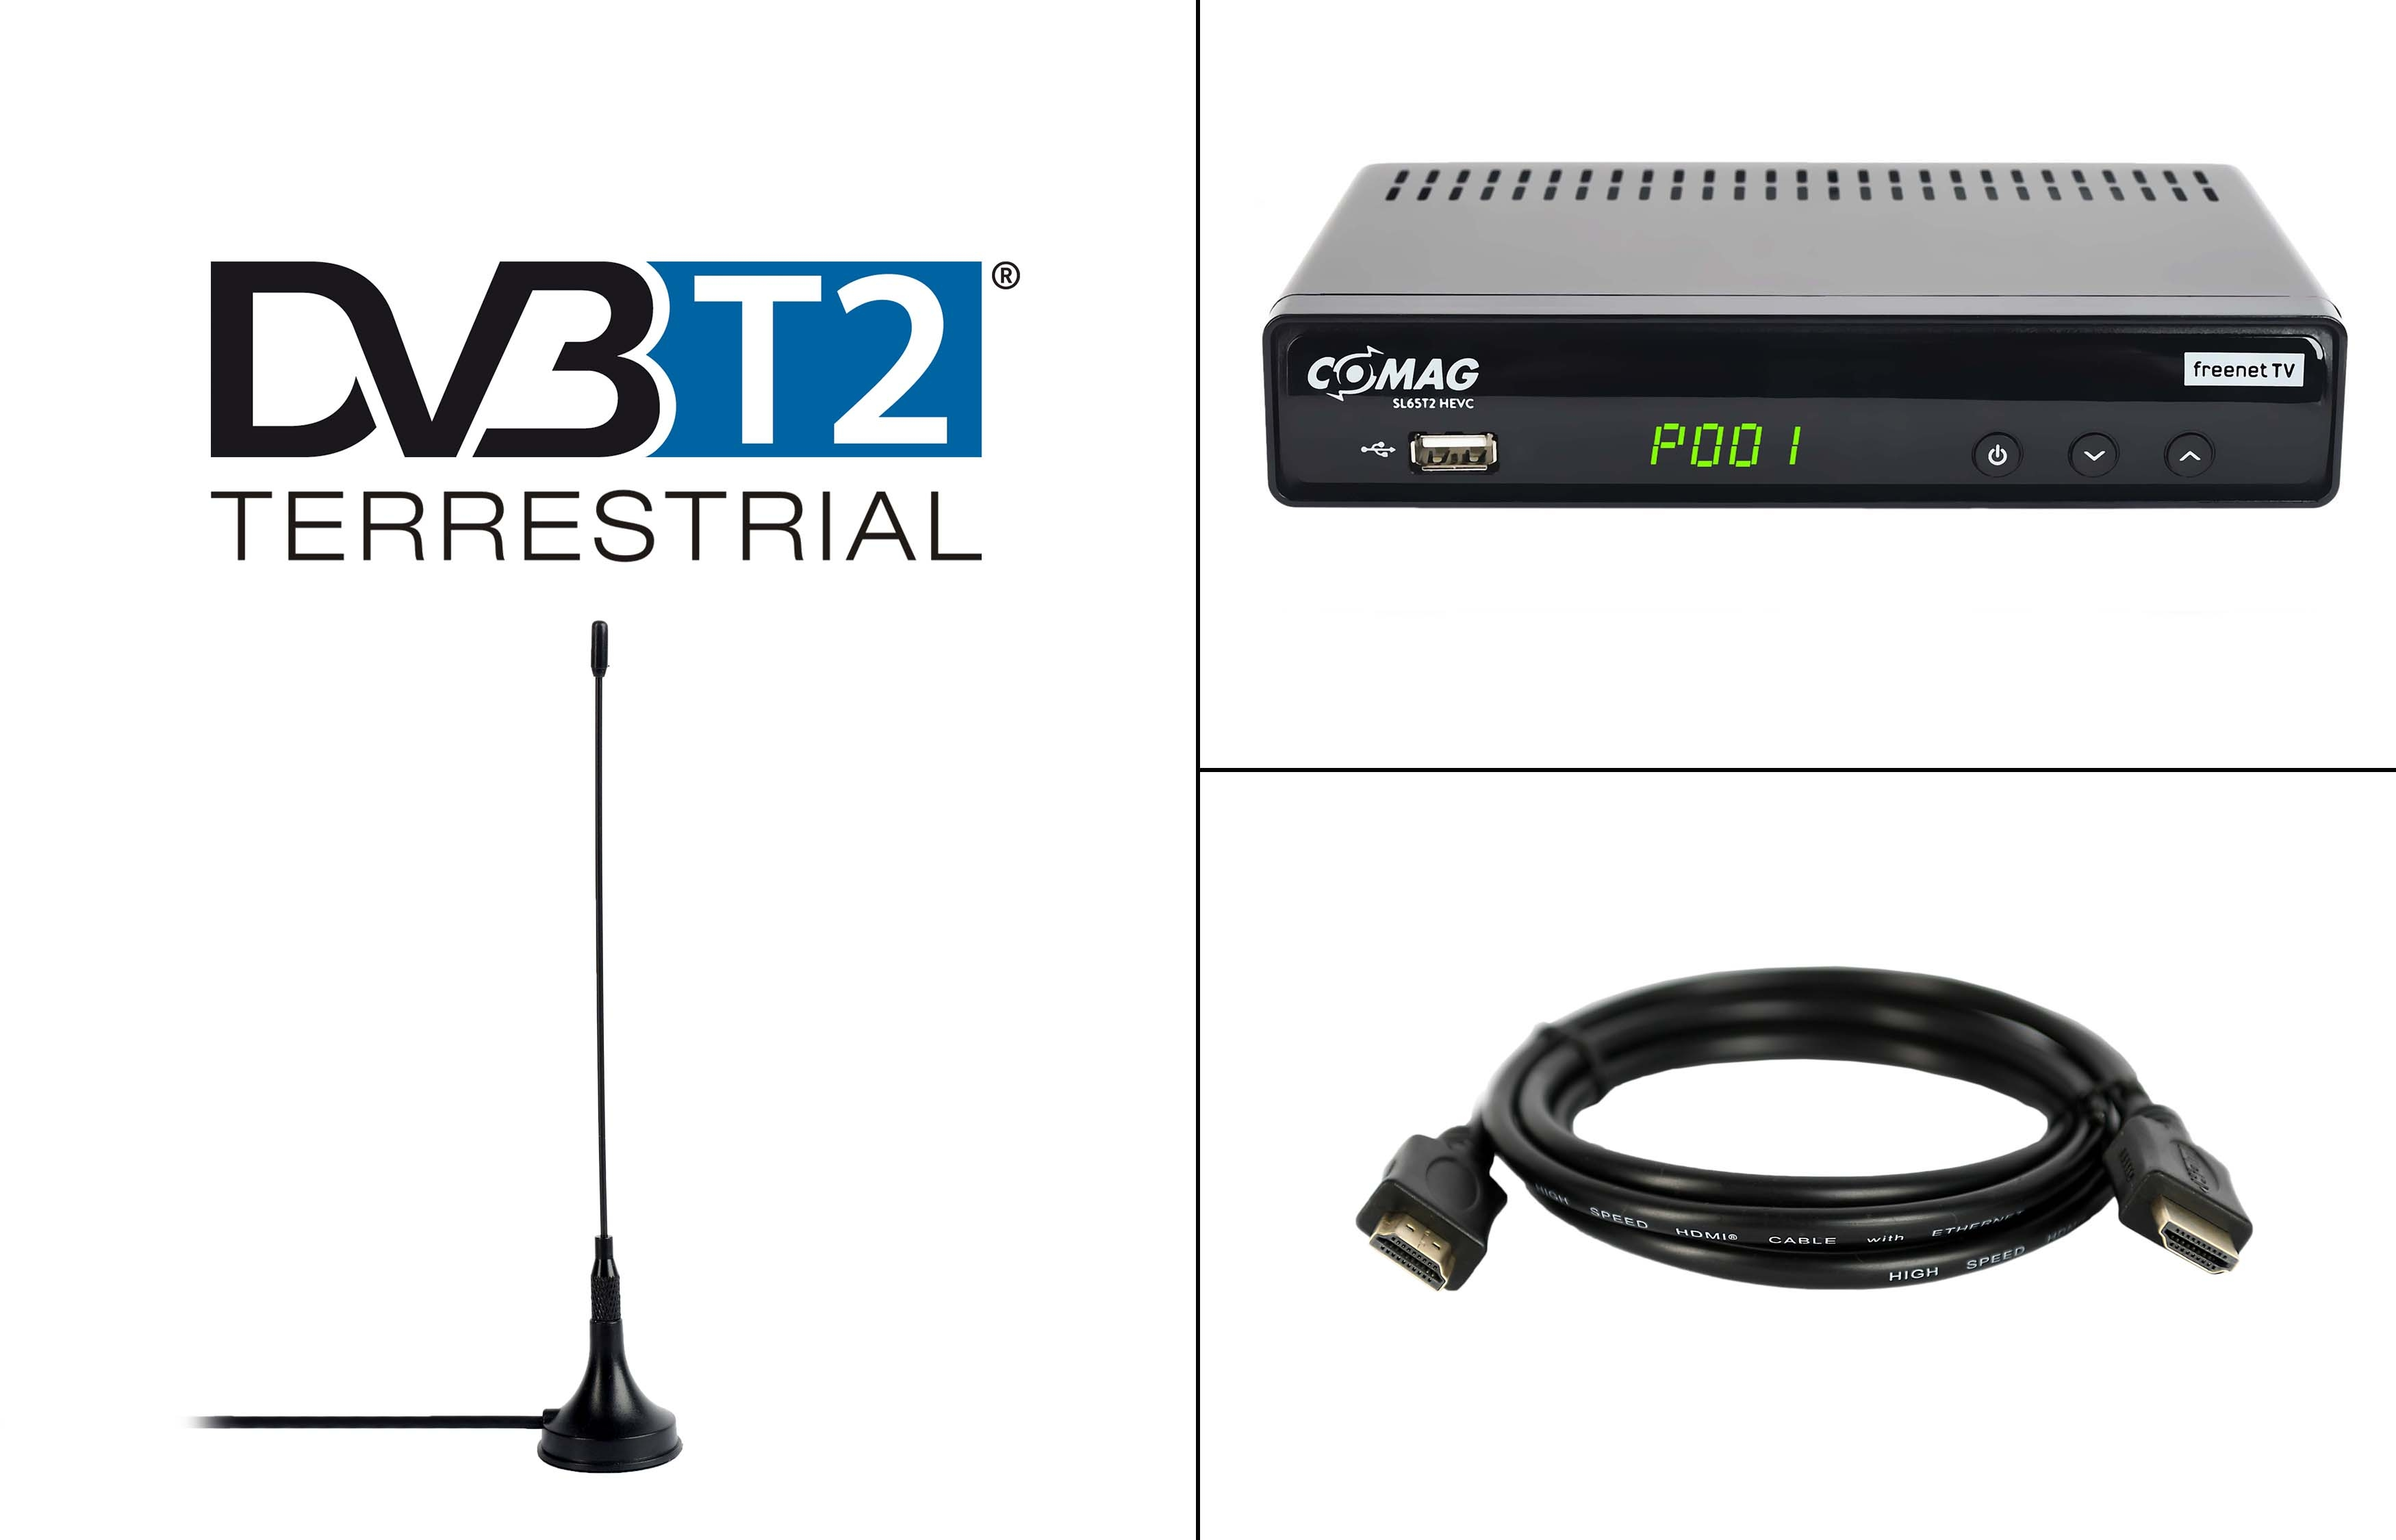 Bundel (H.264), schwarz) SL65T2 (HDTV, PVR-Funktion, (H.265), DVB-T-Receiver DVB-T2 DVB-T, COMAG DVB-T2 Home